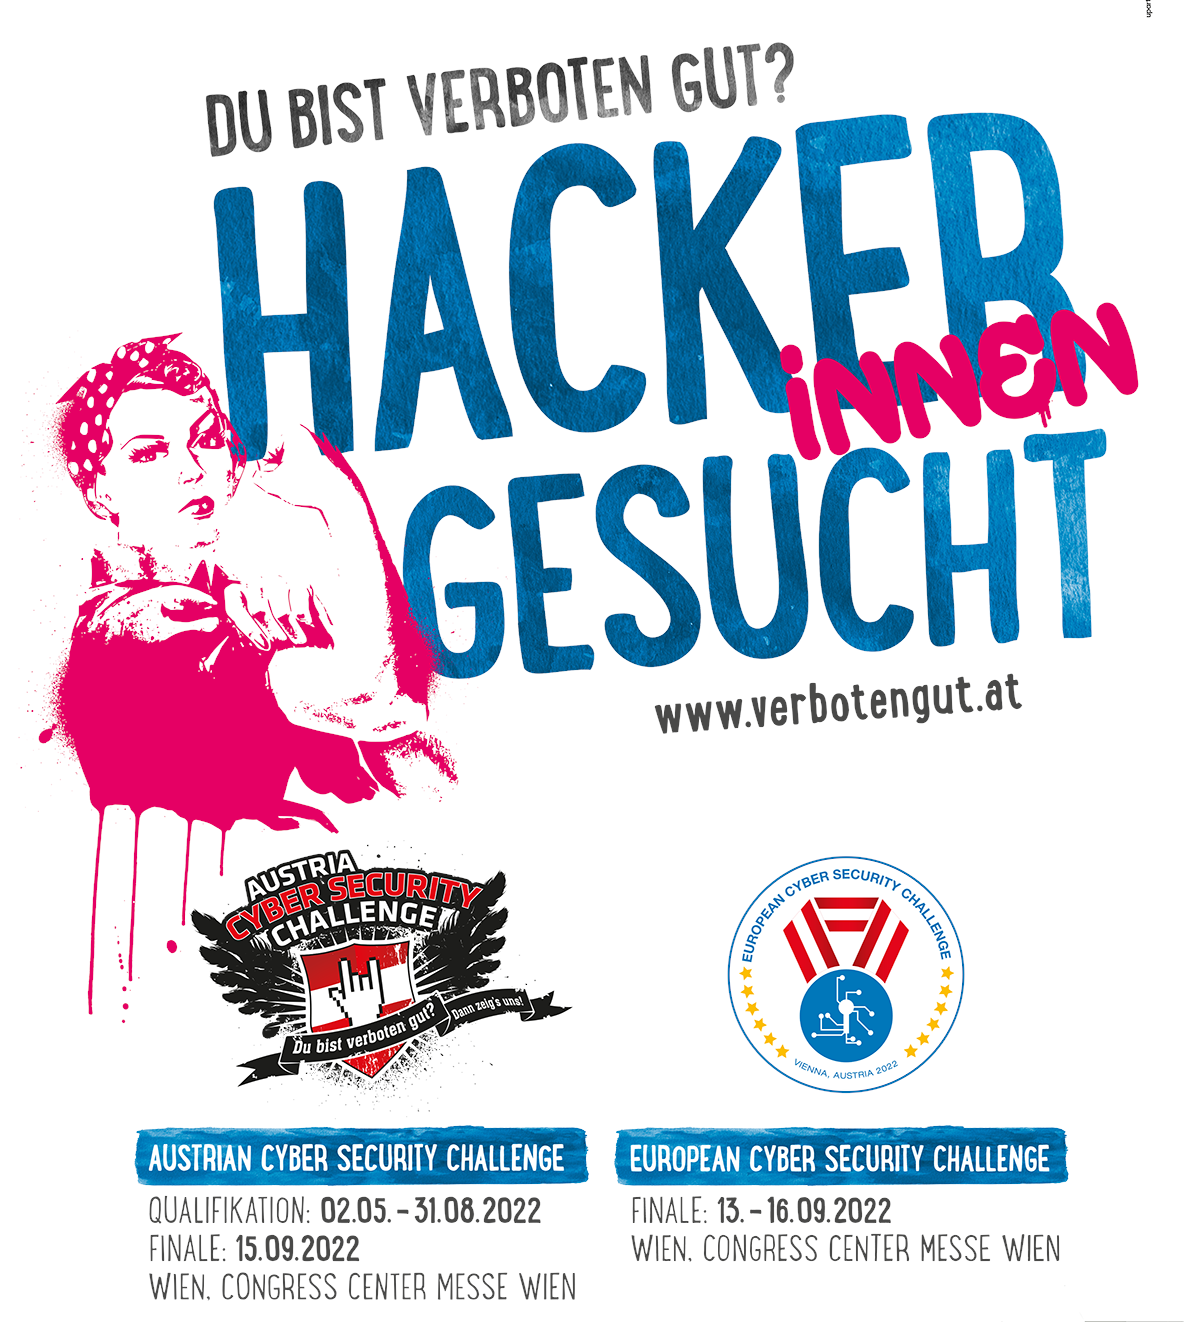 Verboten gut - Poster Austria Cyber Security Challenge 2022